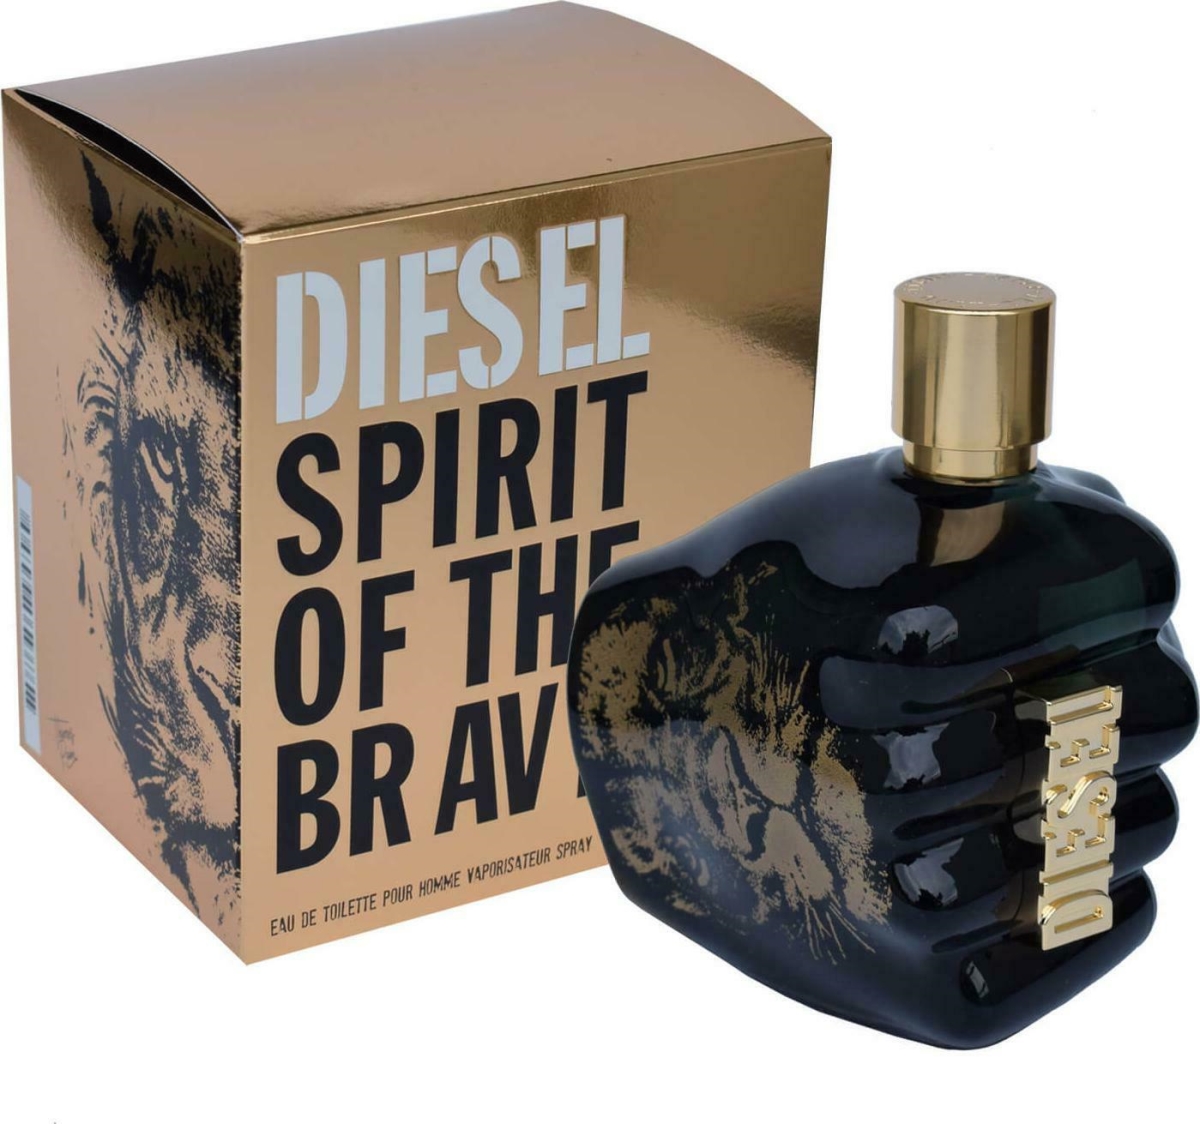 Picture of Loreal DIE1124934 4.2 oz Diesel Spirit of The Brave Eau De Toilette Spray